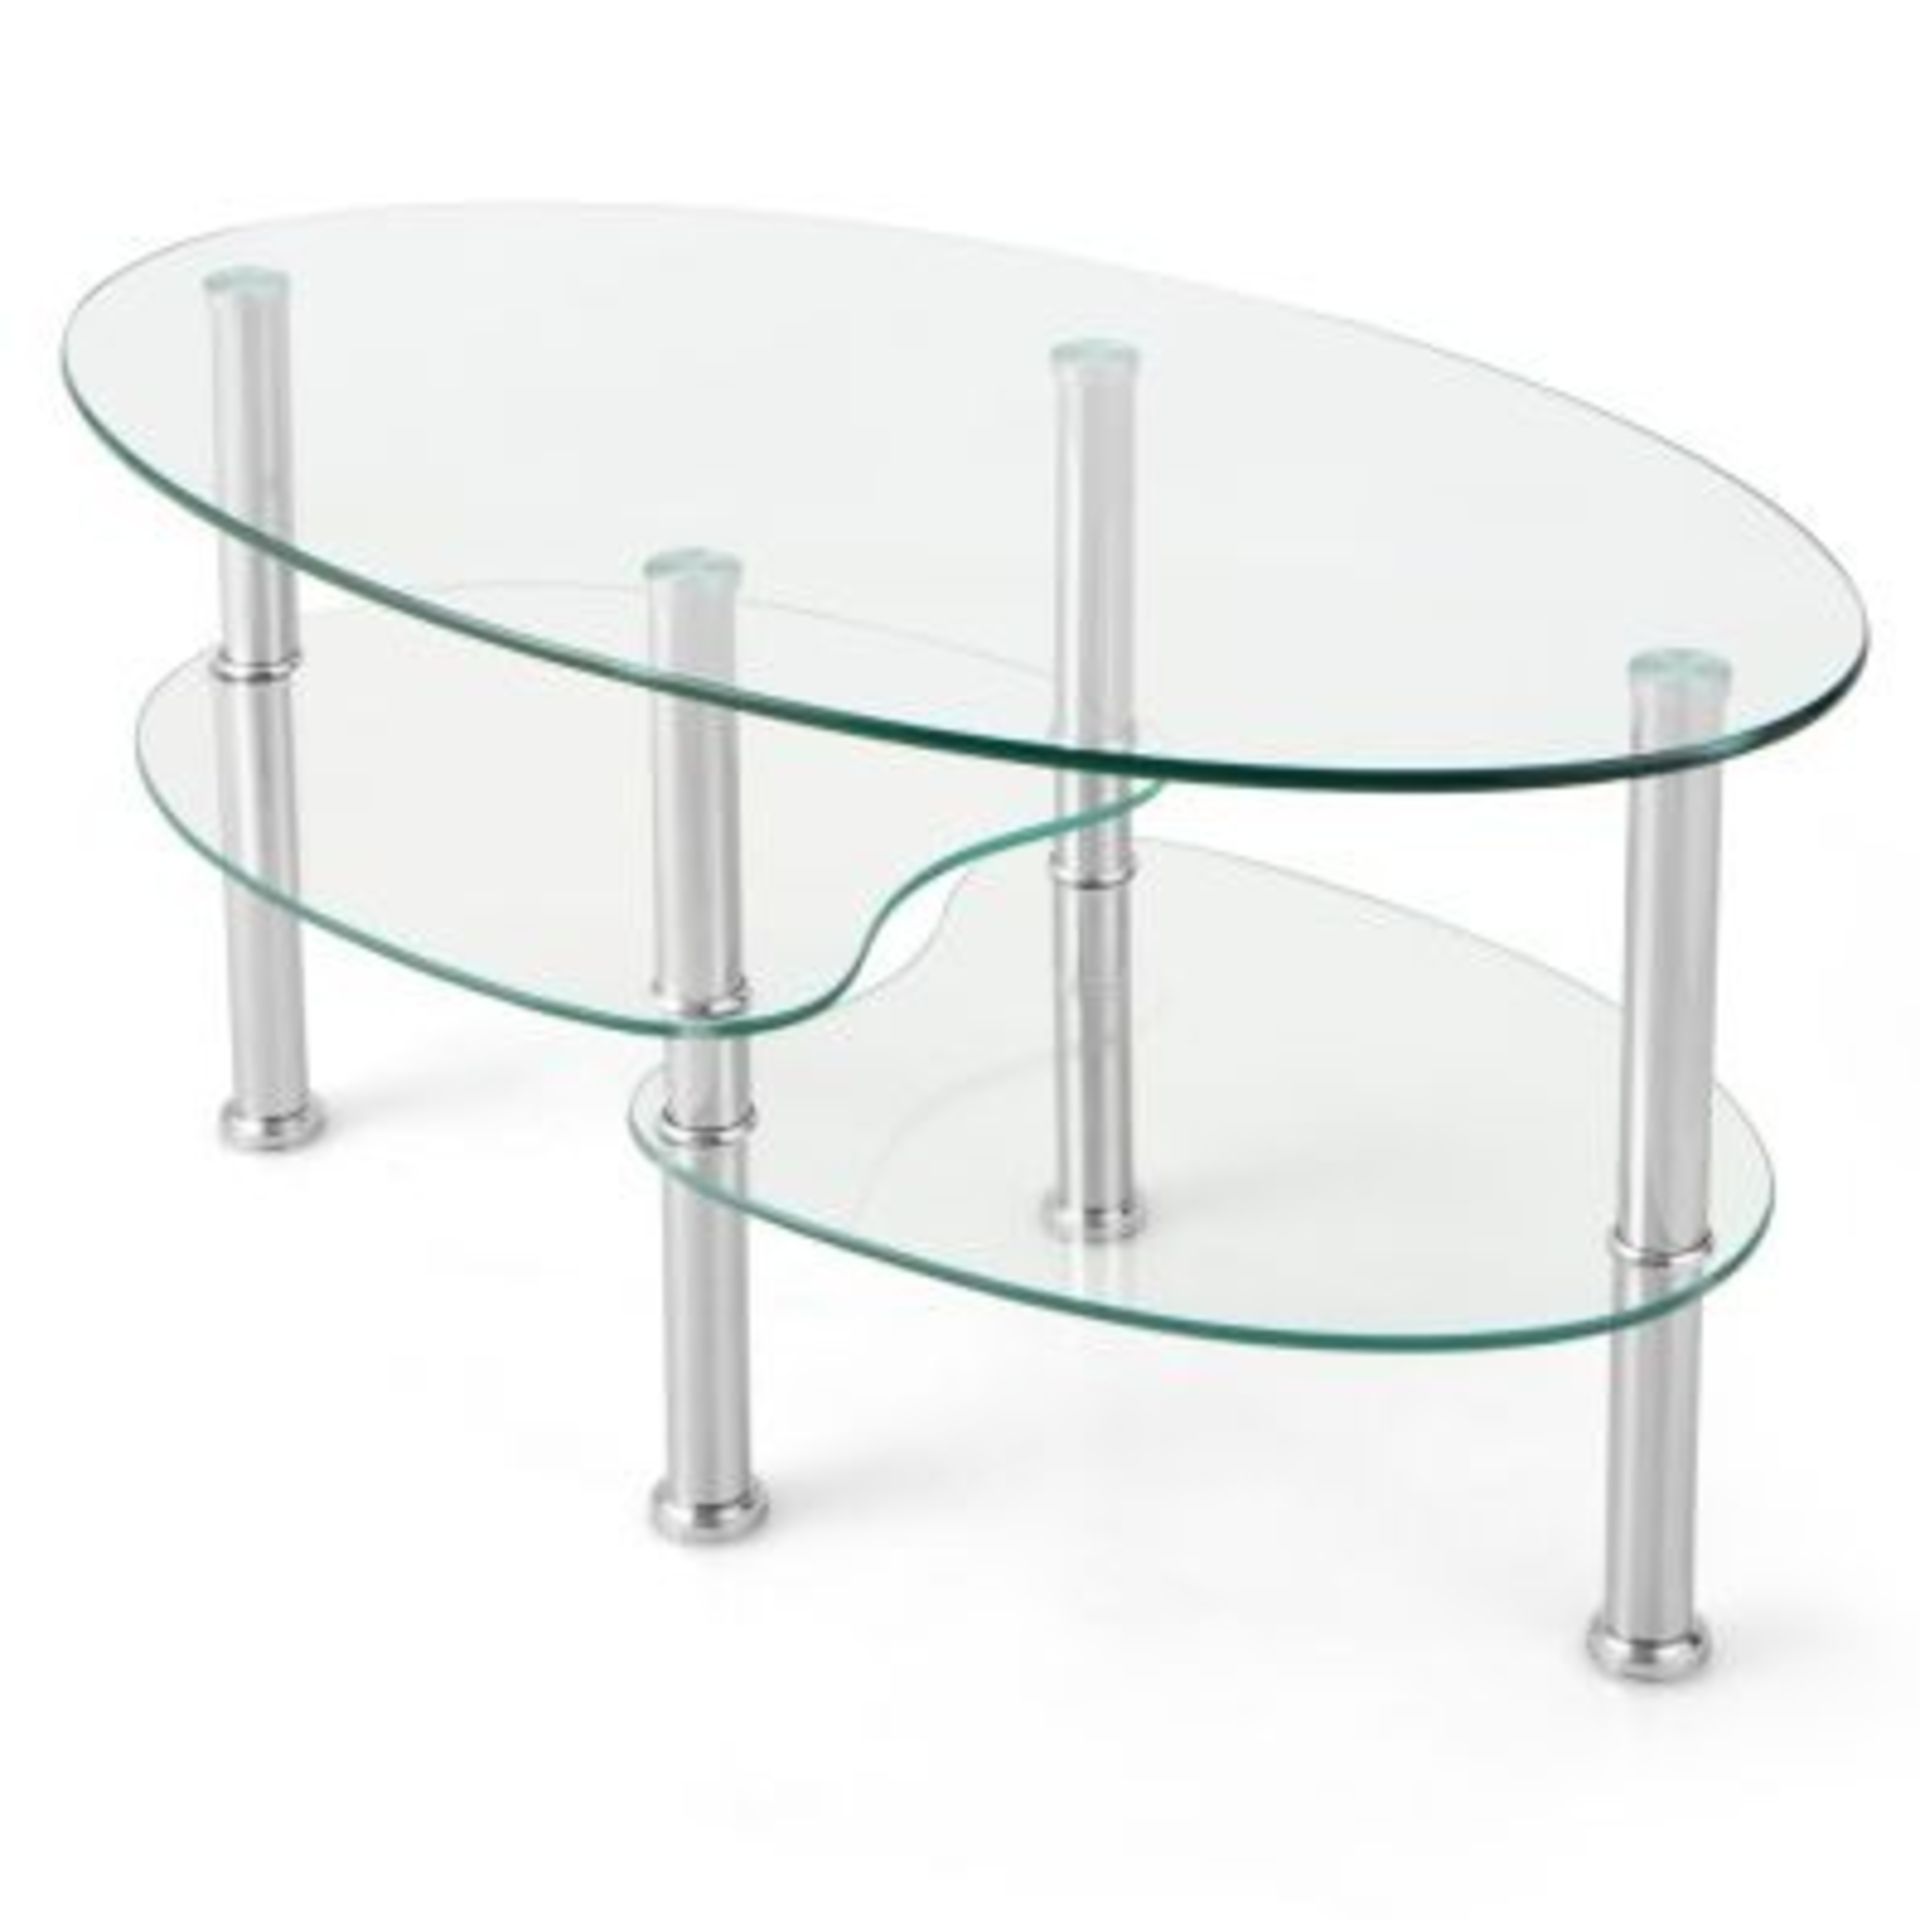 Oval Glass Coffee Table - ER54